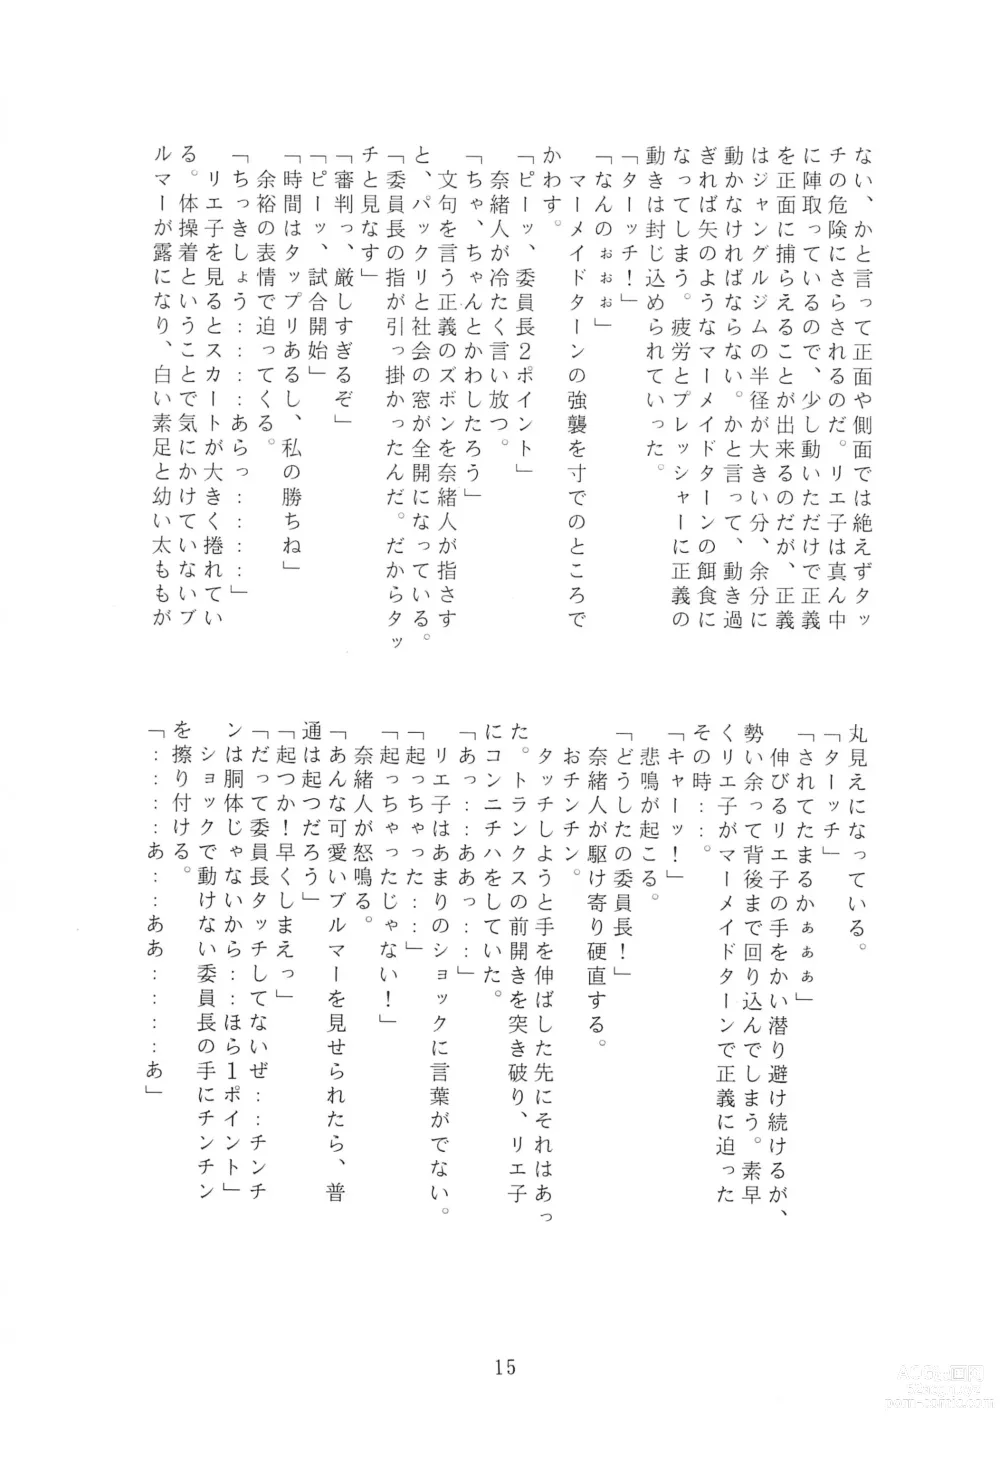 Page 15 of doujinshi JANGLE ONI Mermaid